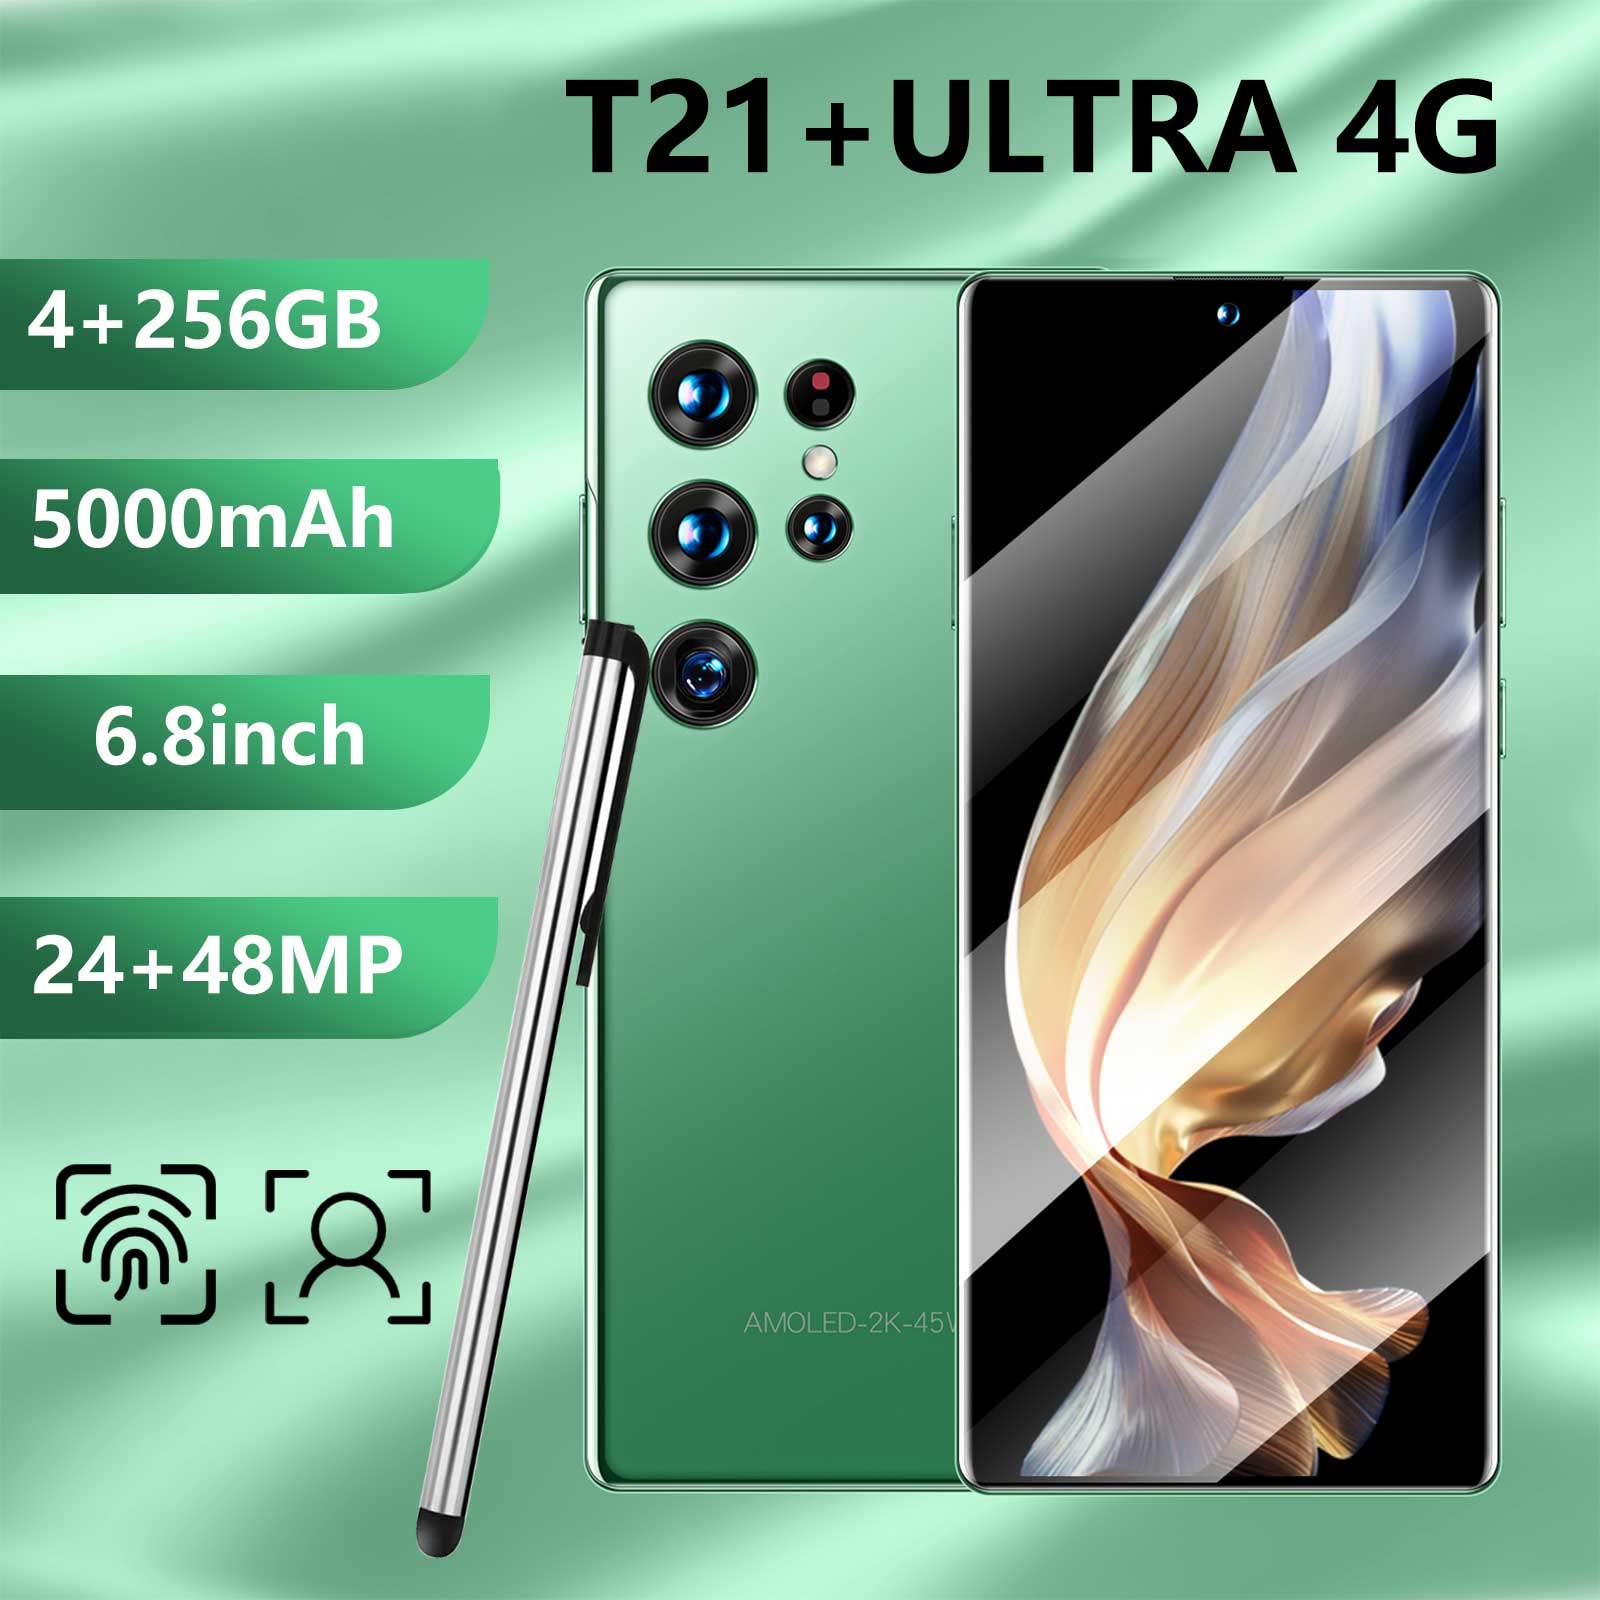 Tozsen 4G Unlocked Cell Phone | 4G+256GB Dual Sim Smartphone | Phones Unlocked with 6.8inch Waterdrop Screen | Android Phone 24+48 MP | 5000mAh | Fingerprint Lock & Face ID | US Version(Green)